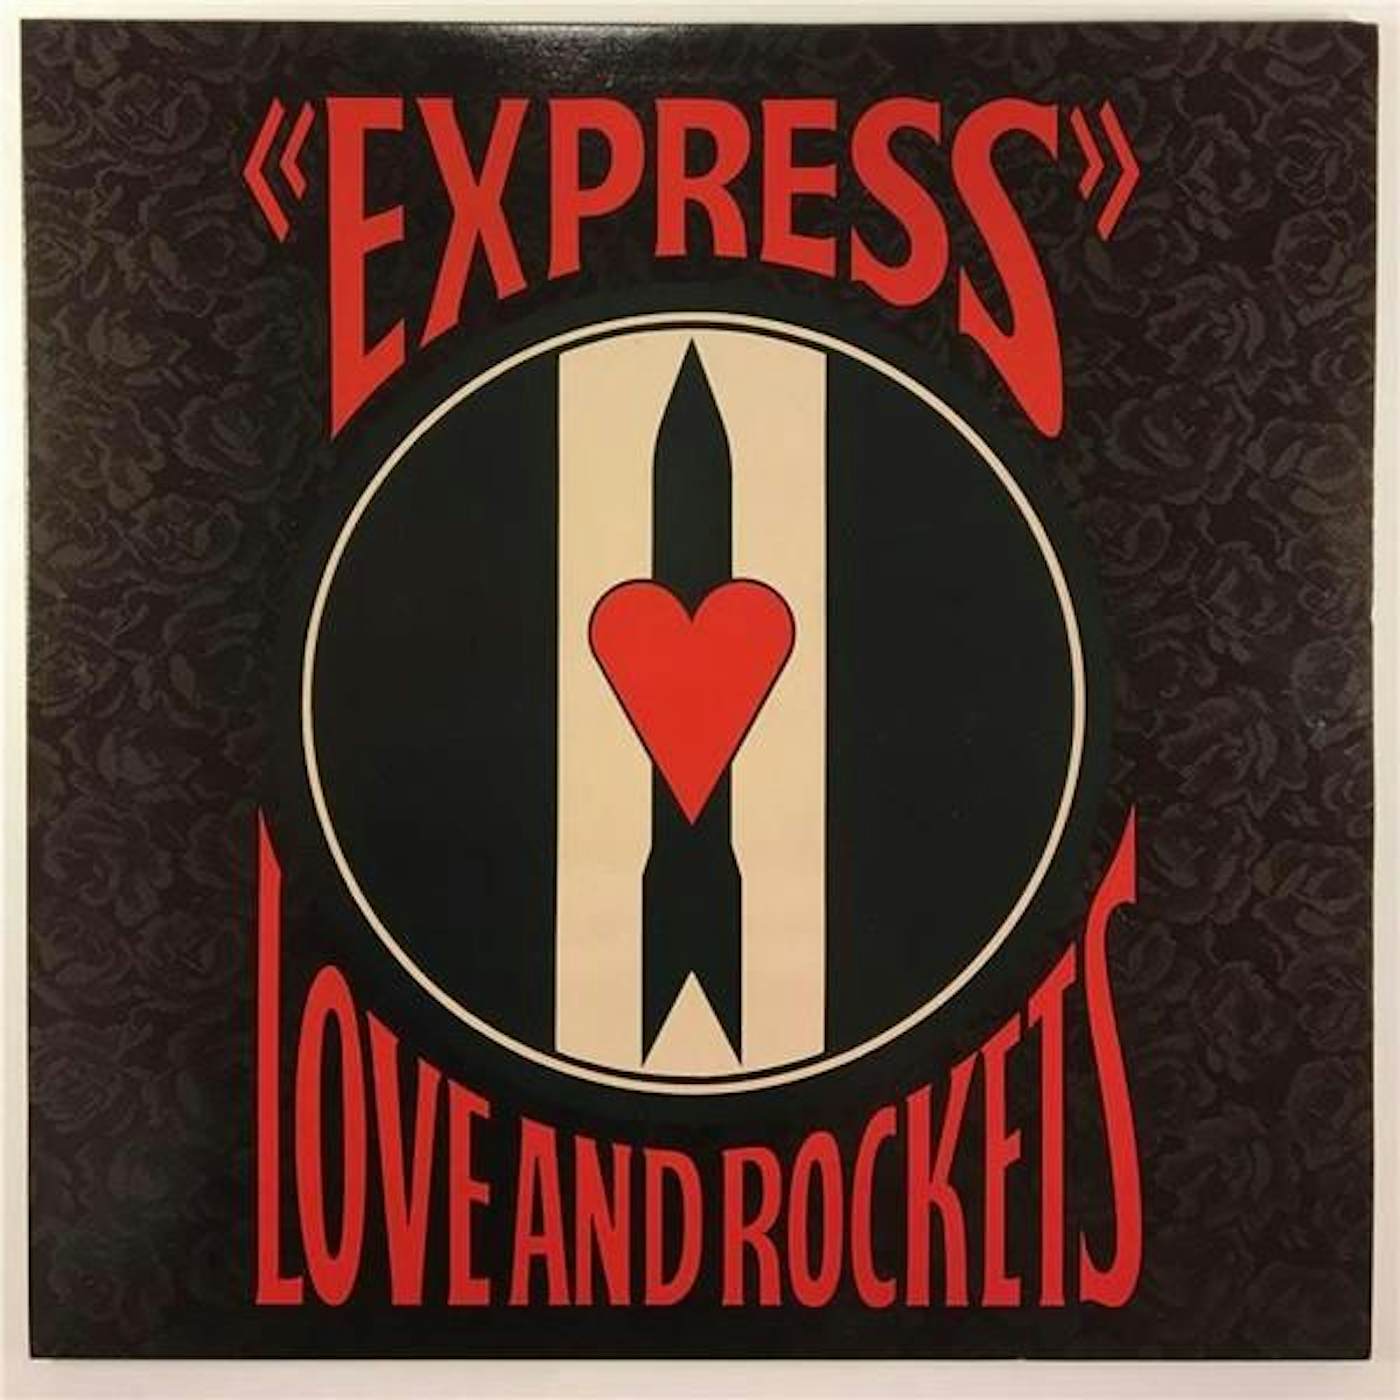 Love and Rockets - Express (Vinyl)